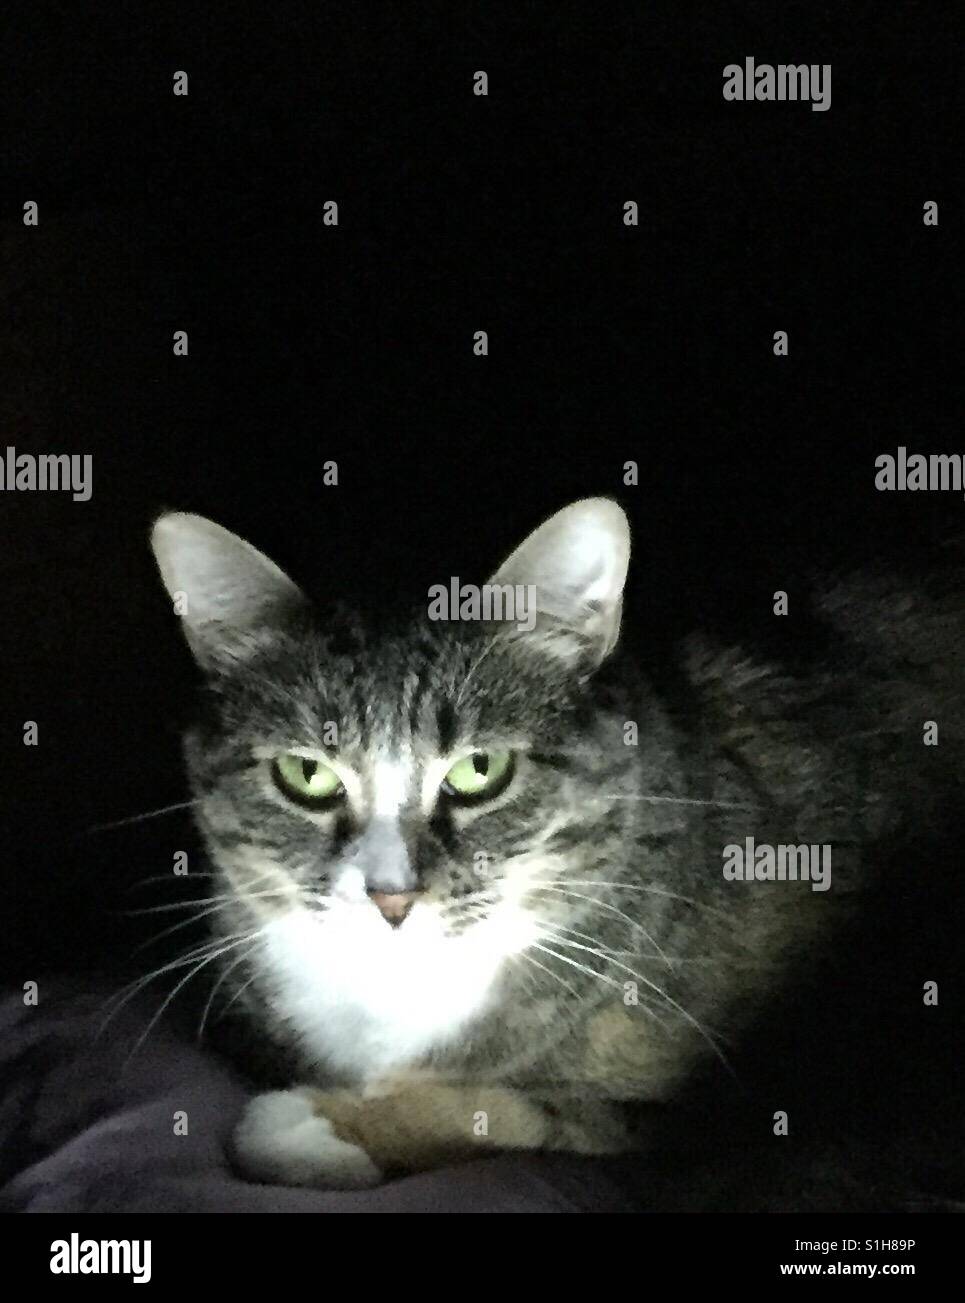 Beleuchtete Katze im Dunkeln Stockfotografie - Alamy